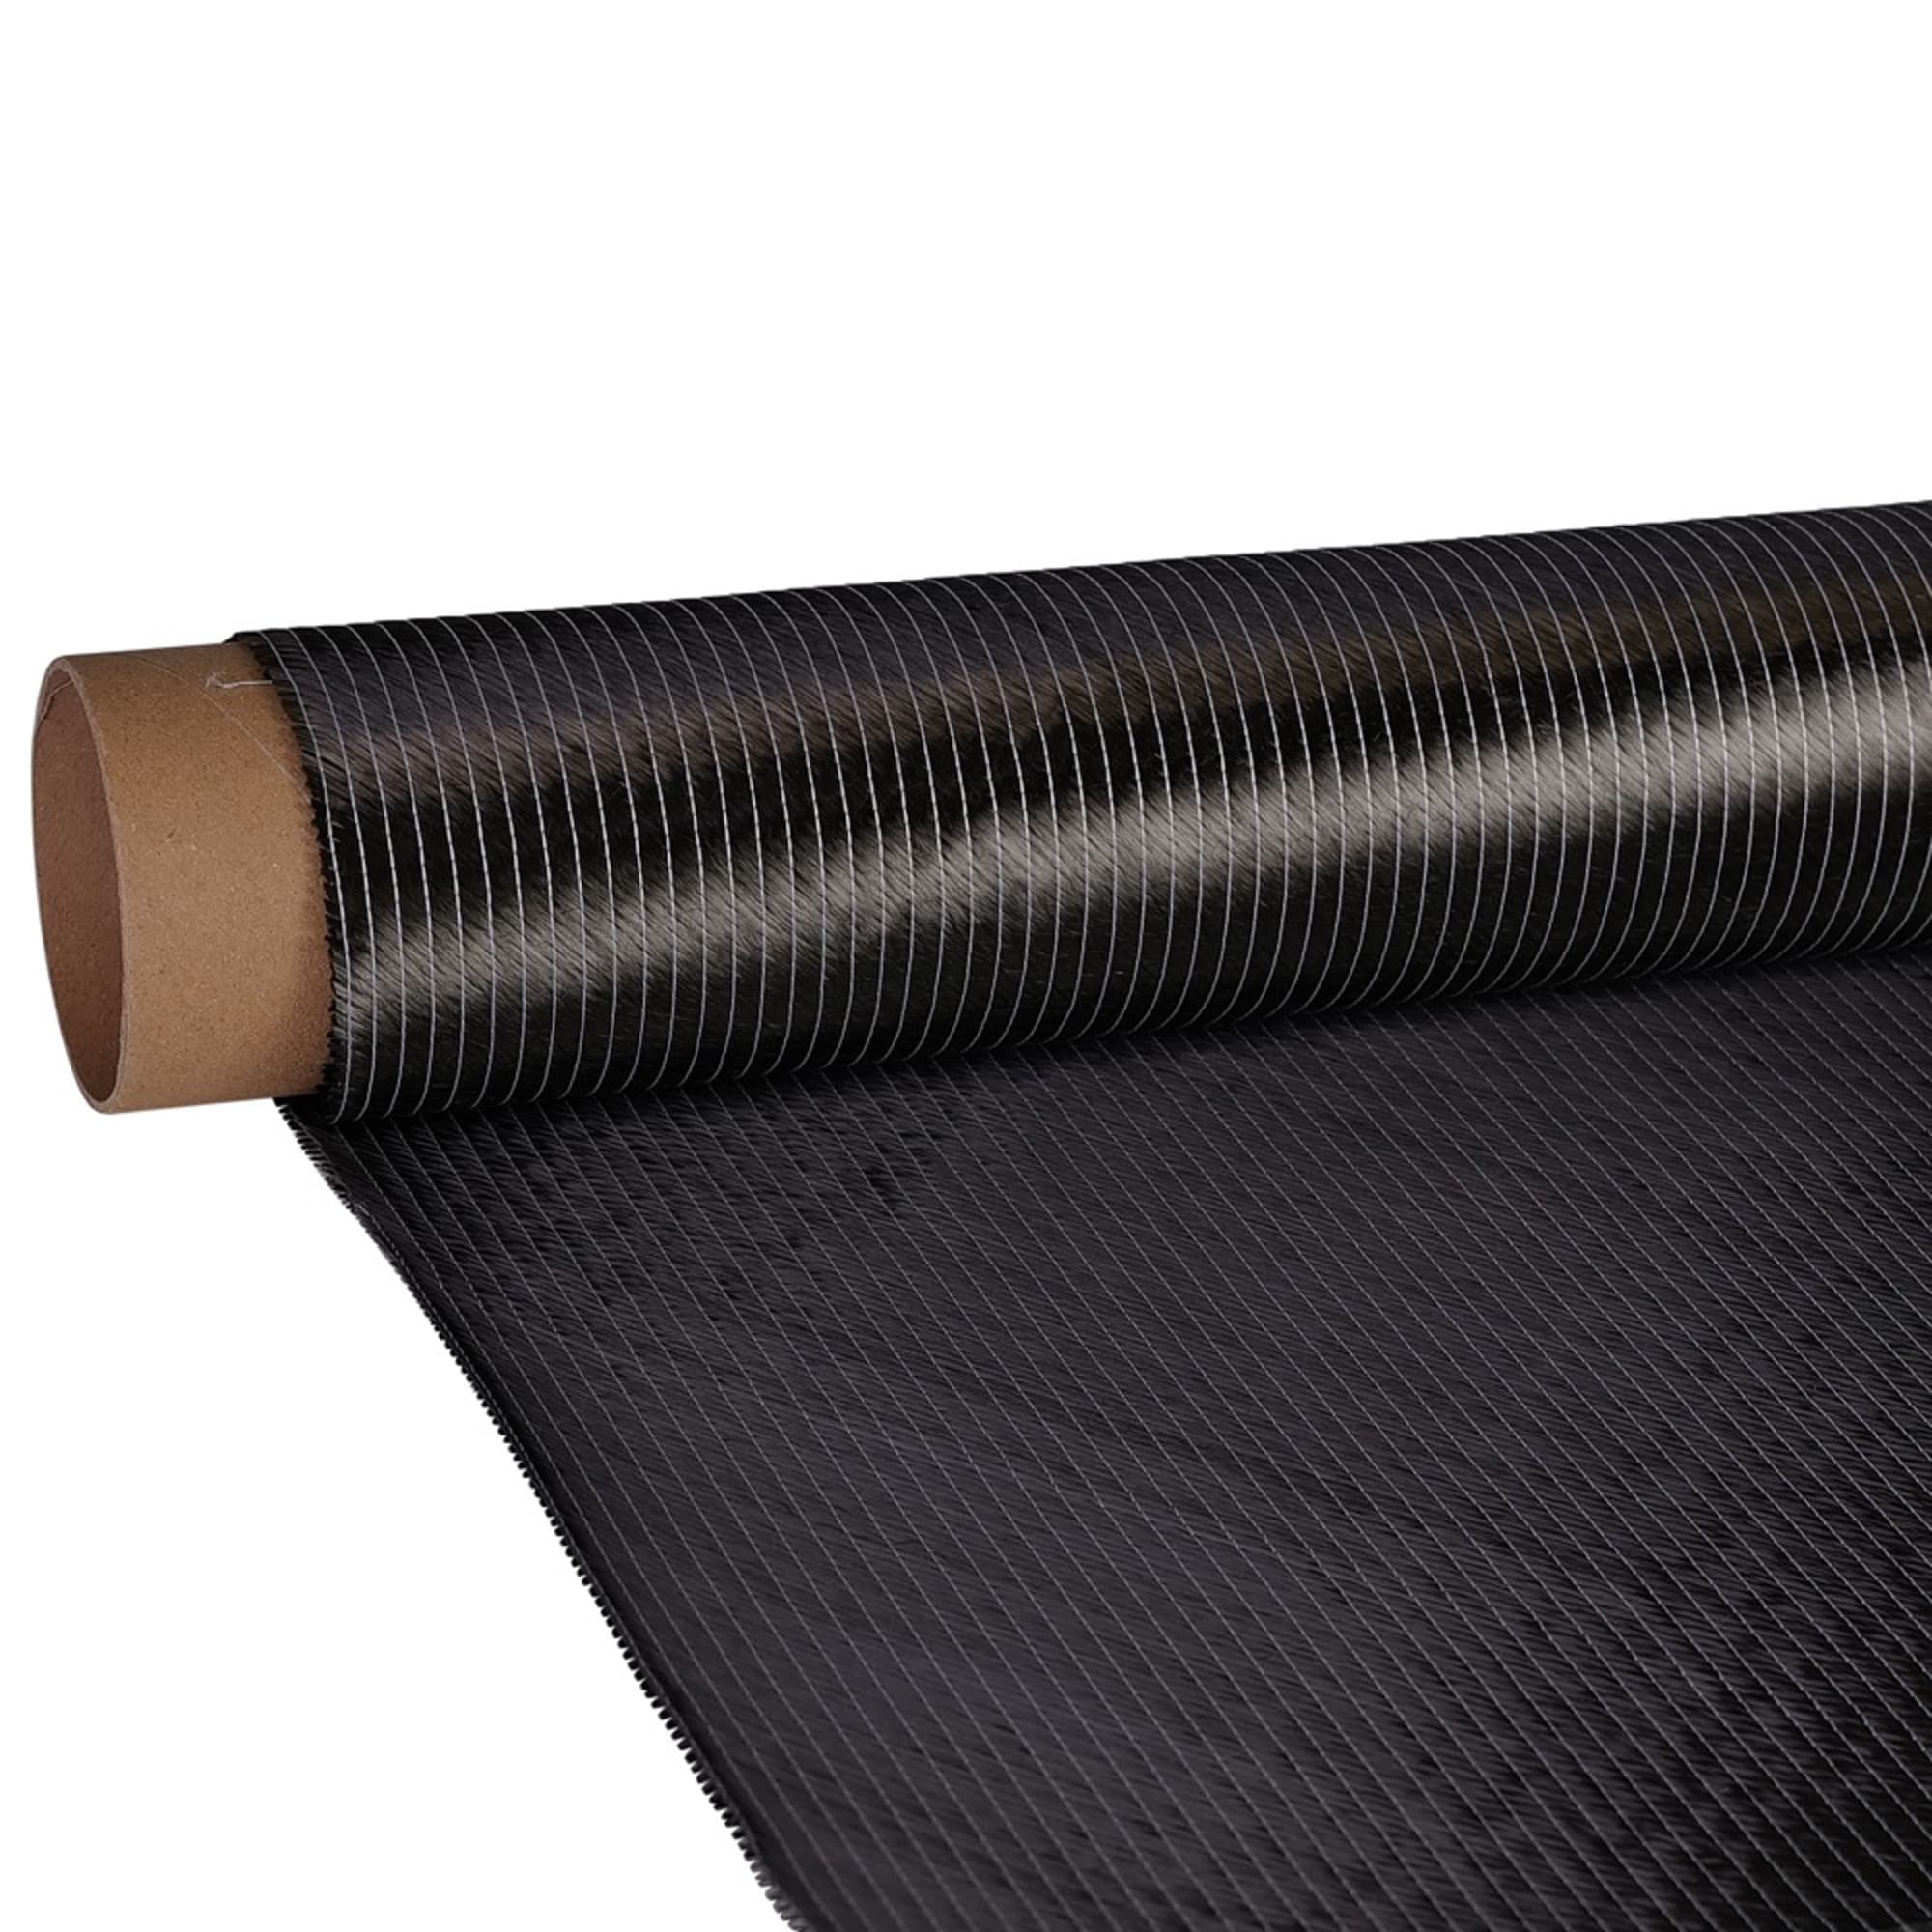 SIGRATEX® Carbon non-crimp fabric 610 g/m² (biaxial) 127 cm, image 7